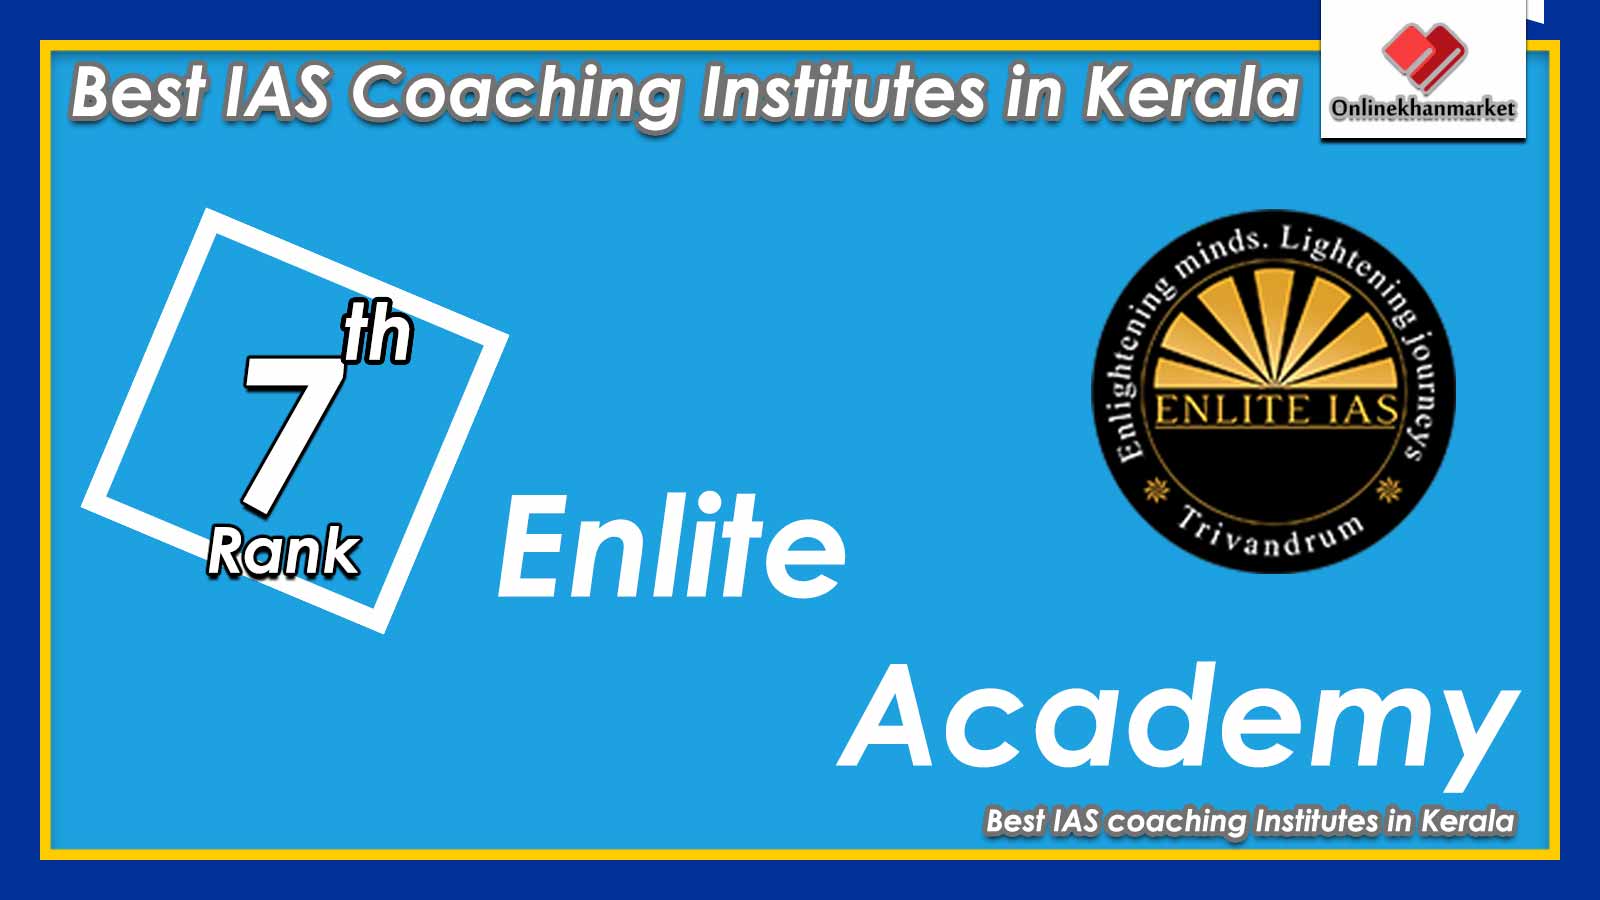 Best IAS Coaching in Kerala